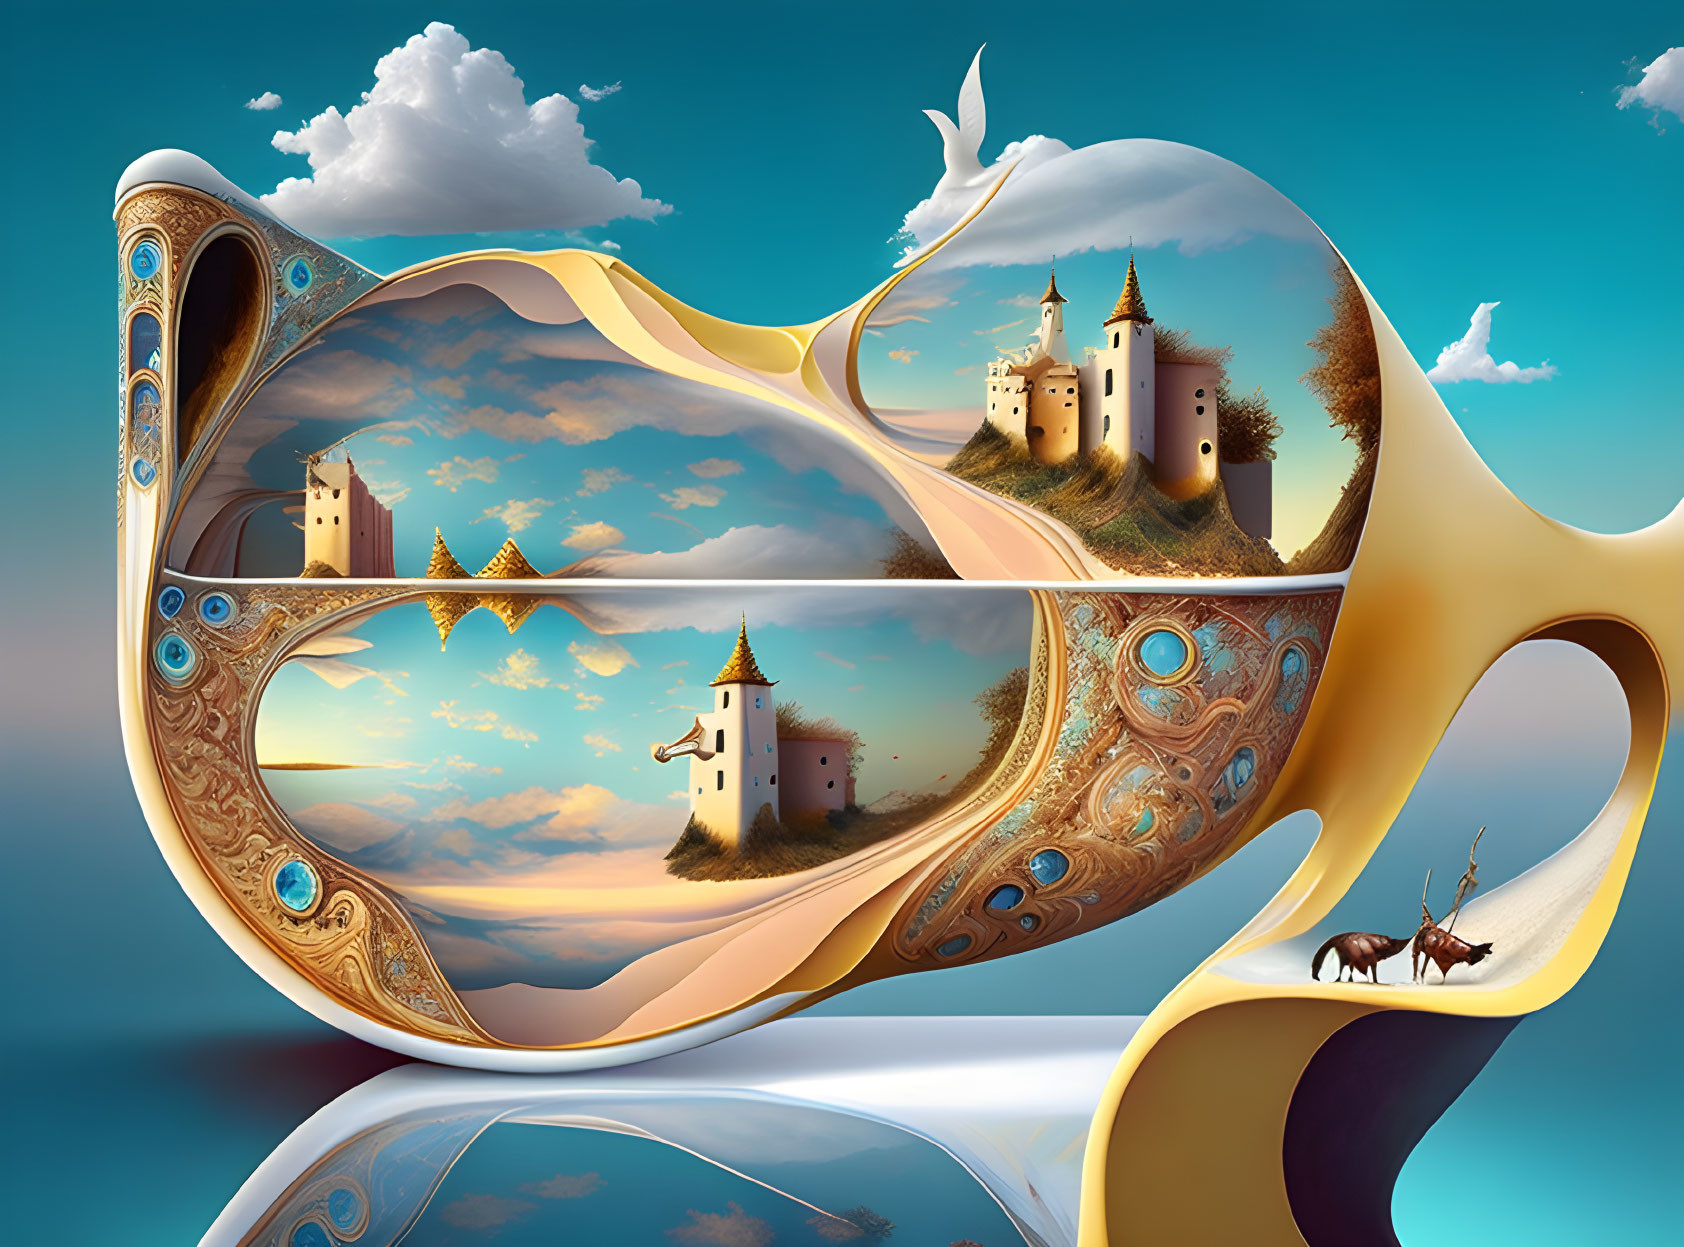 Surreal landscape artwork in Möbius strip structure with castles, hills, birds, stag